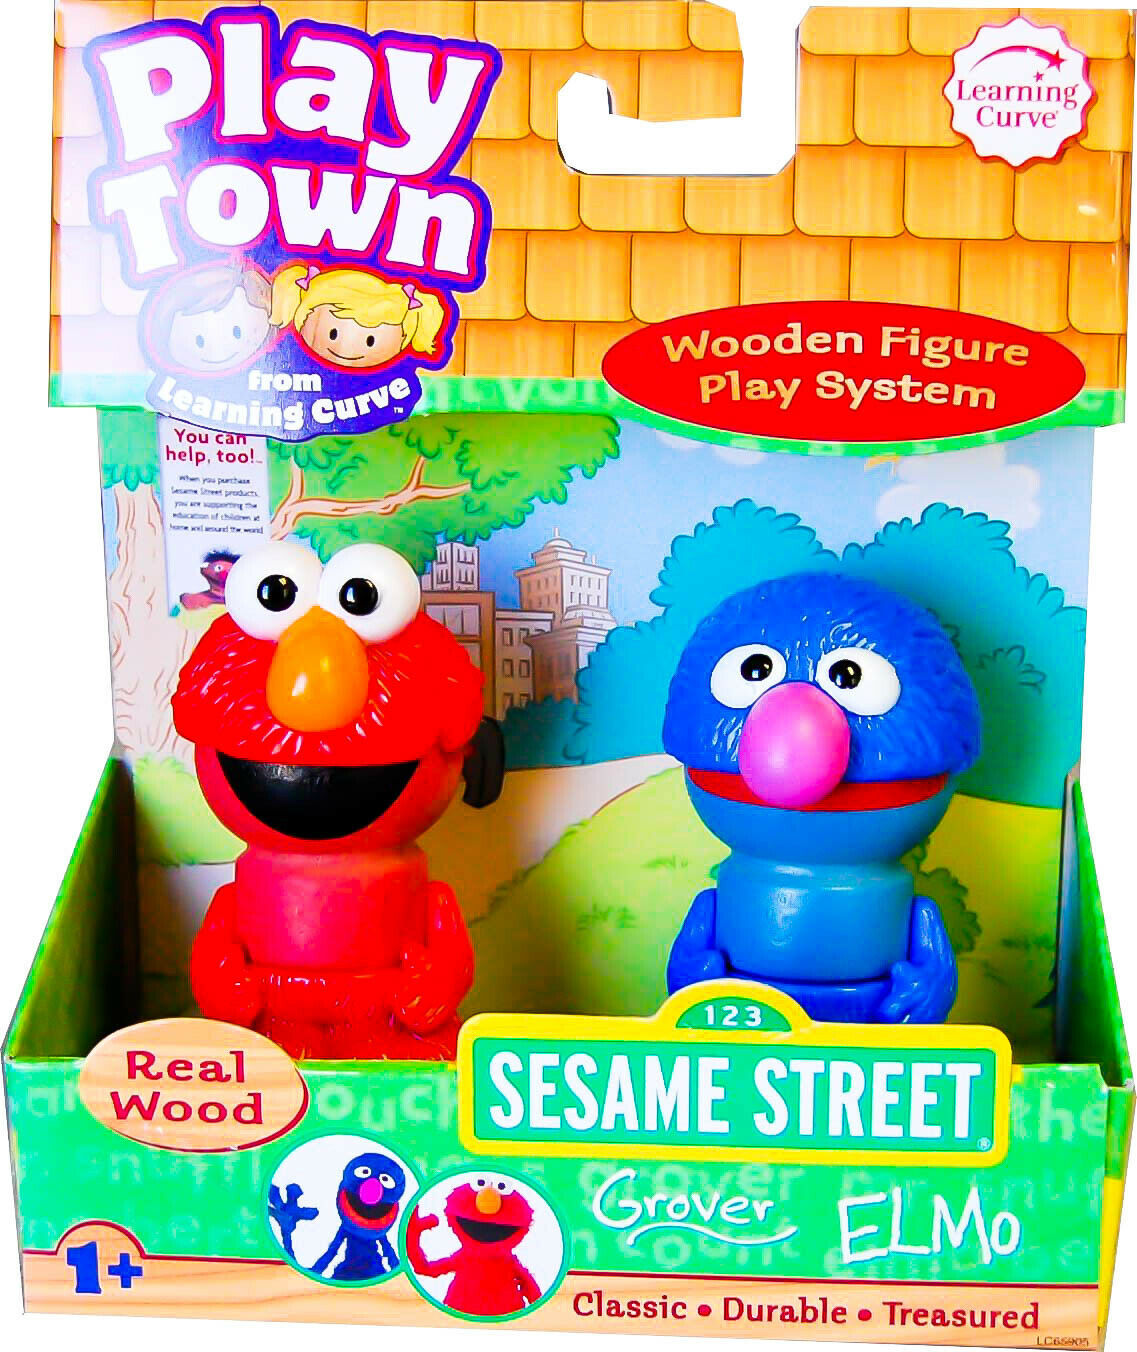 Elmo Grover Sesame Street Action Figure Wooden Toys Set child development play